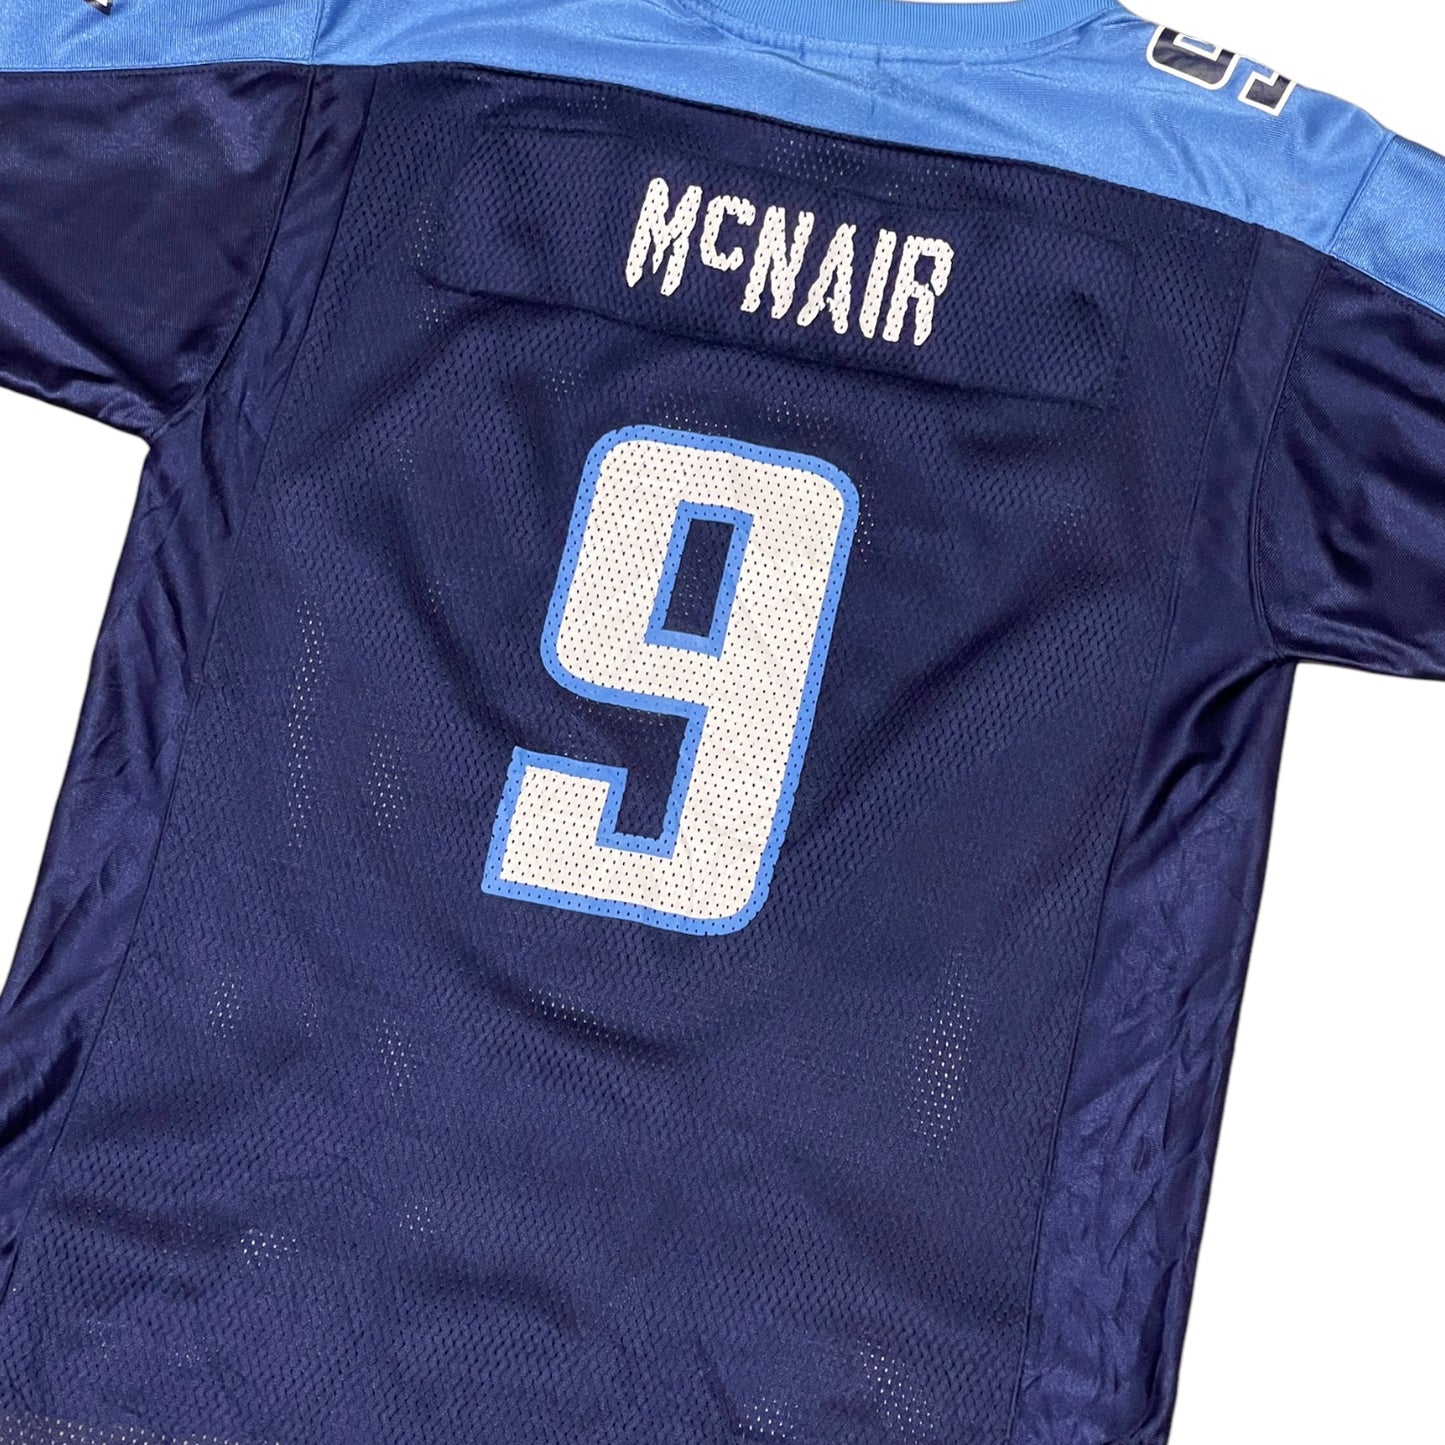 Reebok Titans "McNair" NFL Jersey